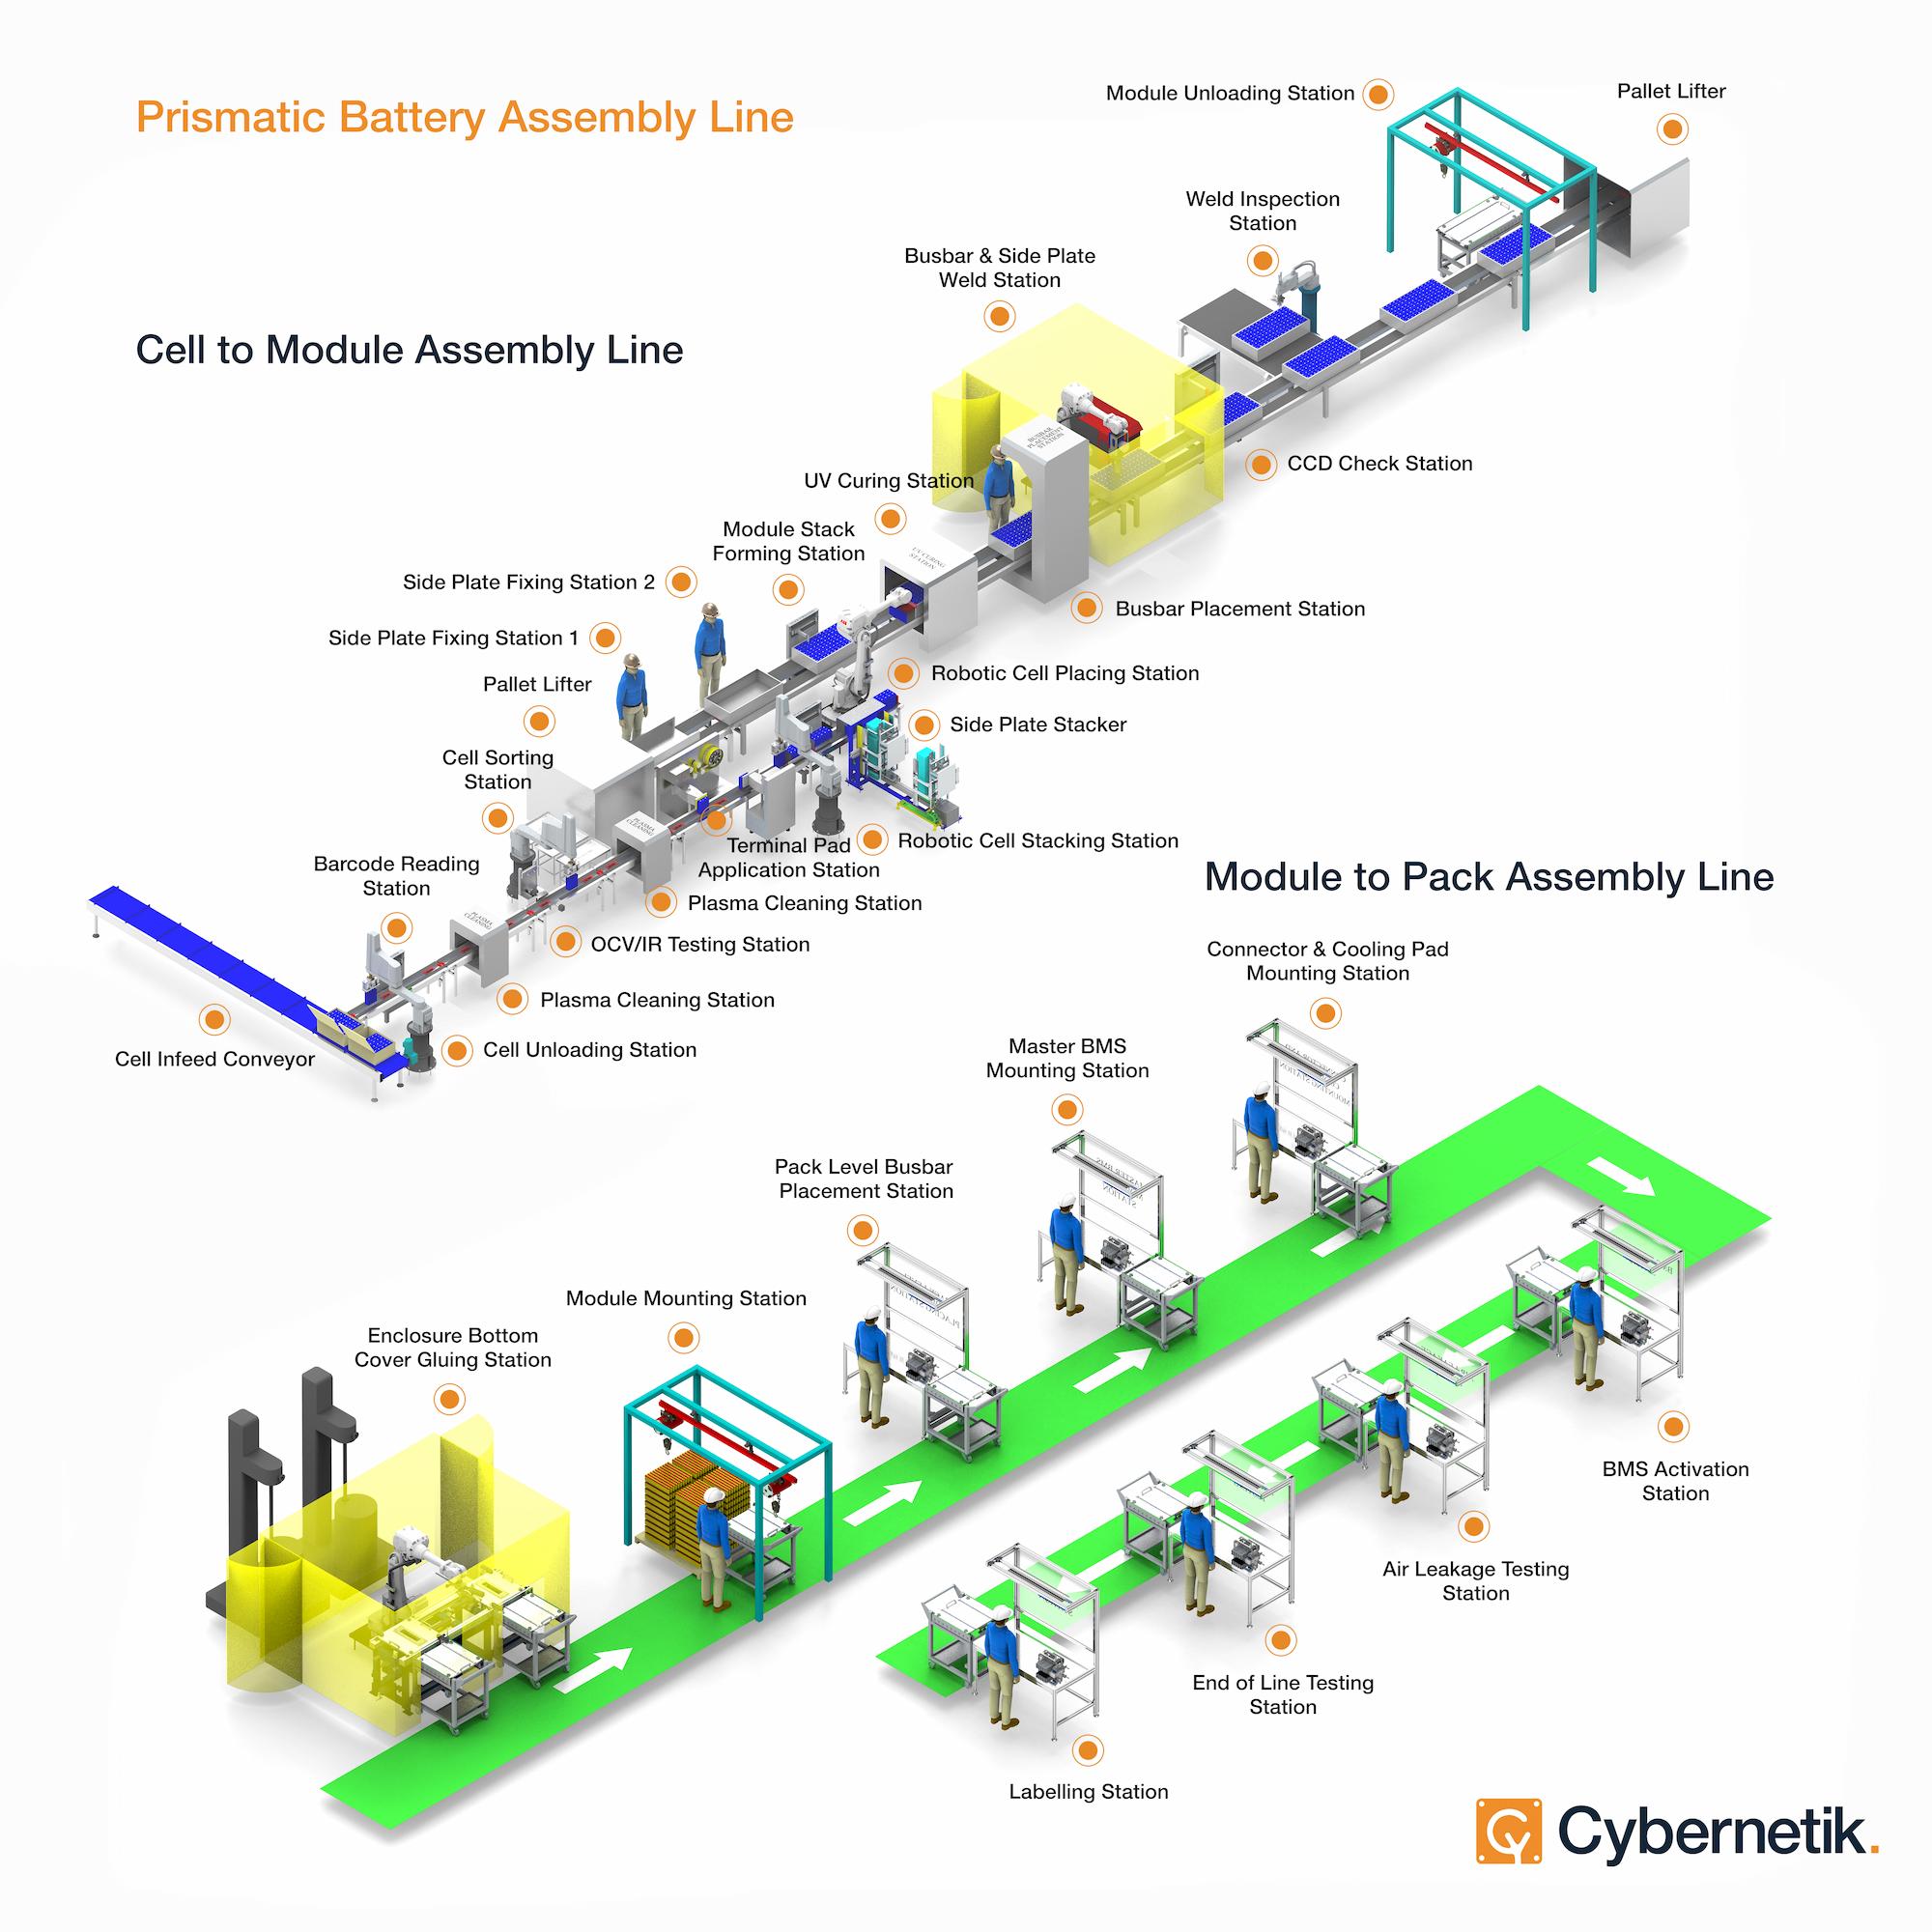 Prismatic Battery Assembly Line